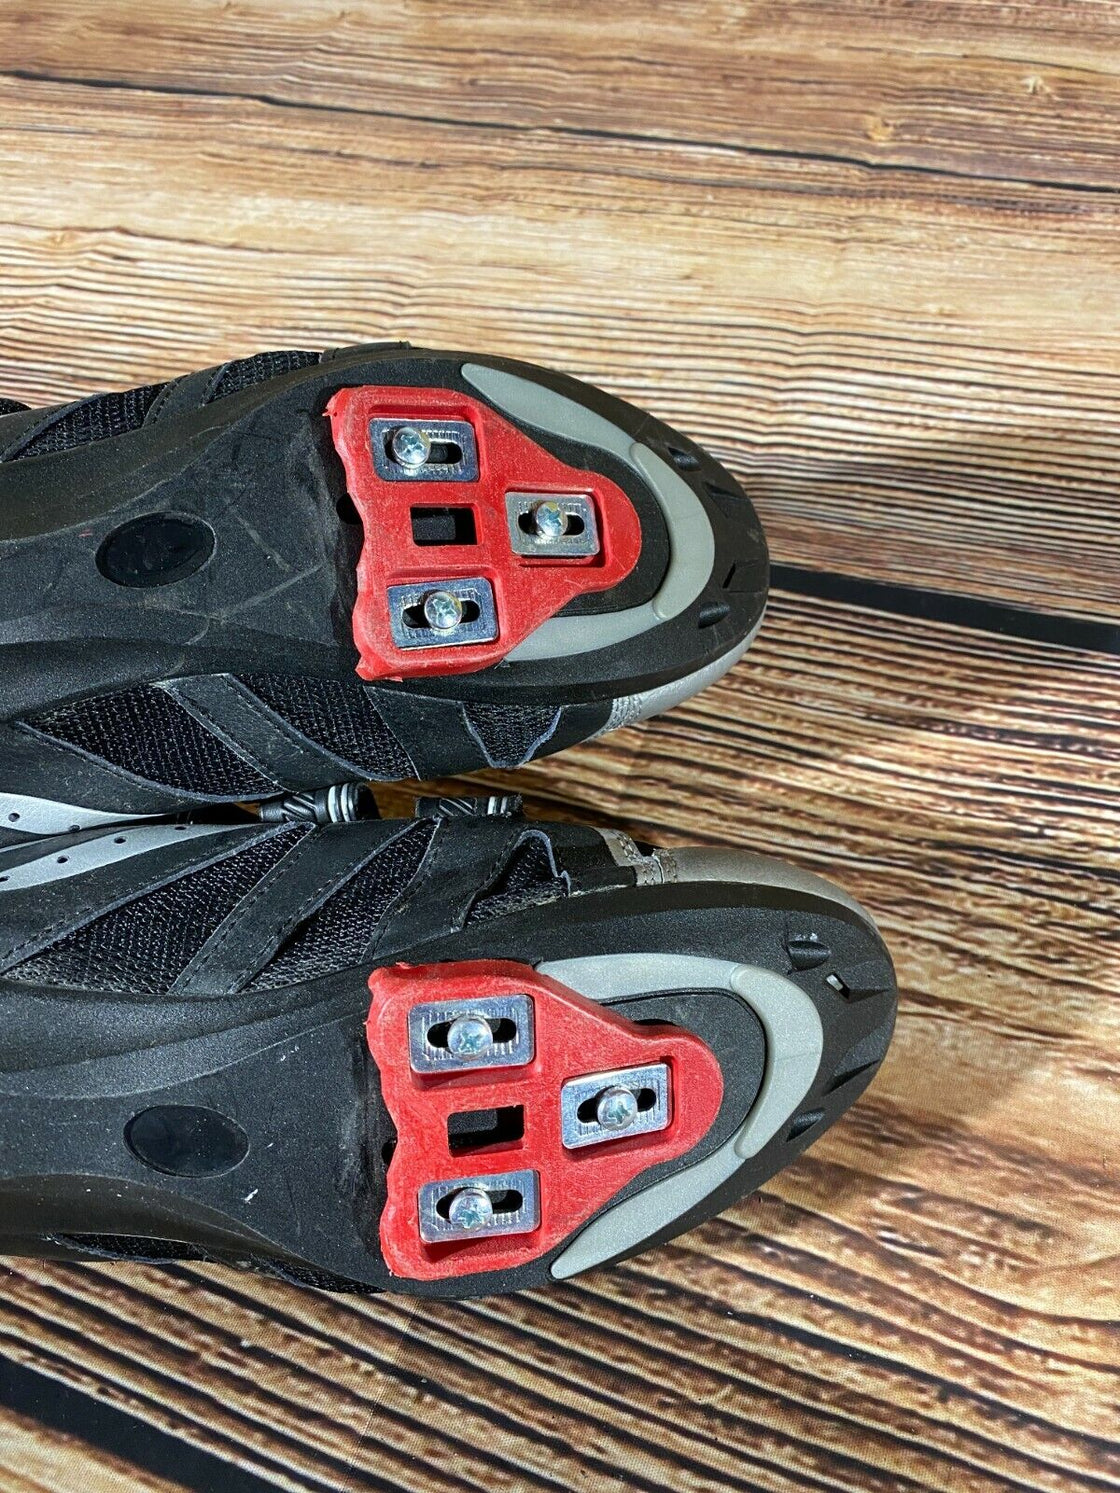 XTREME Road Cycling Shoes Biking Boots Shoes Size EU45, US11, Mondo 290